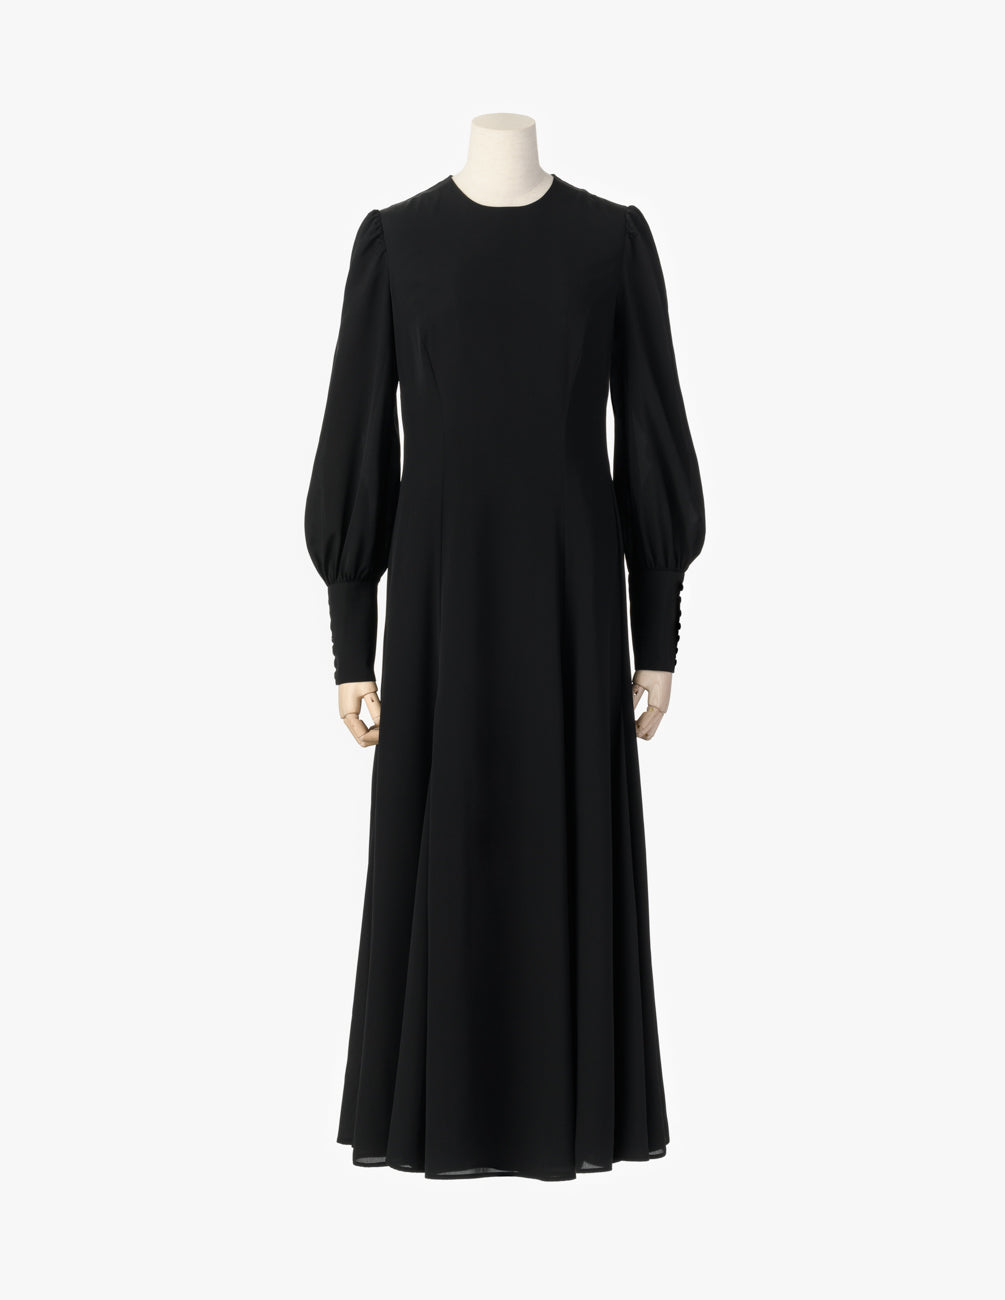 MARIHA(マリハ) セレナーデのドレス (ボリュームスリーブ) Black 